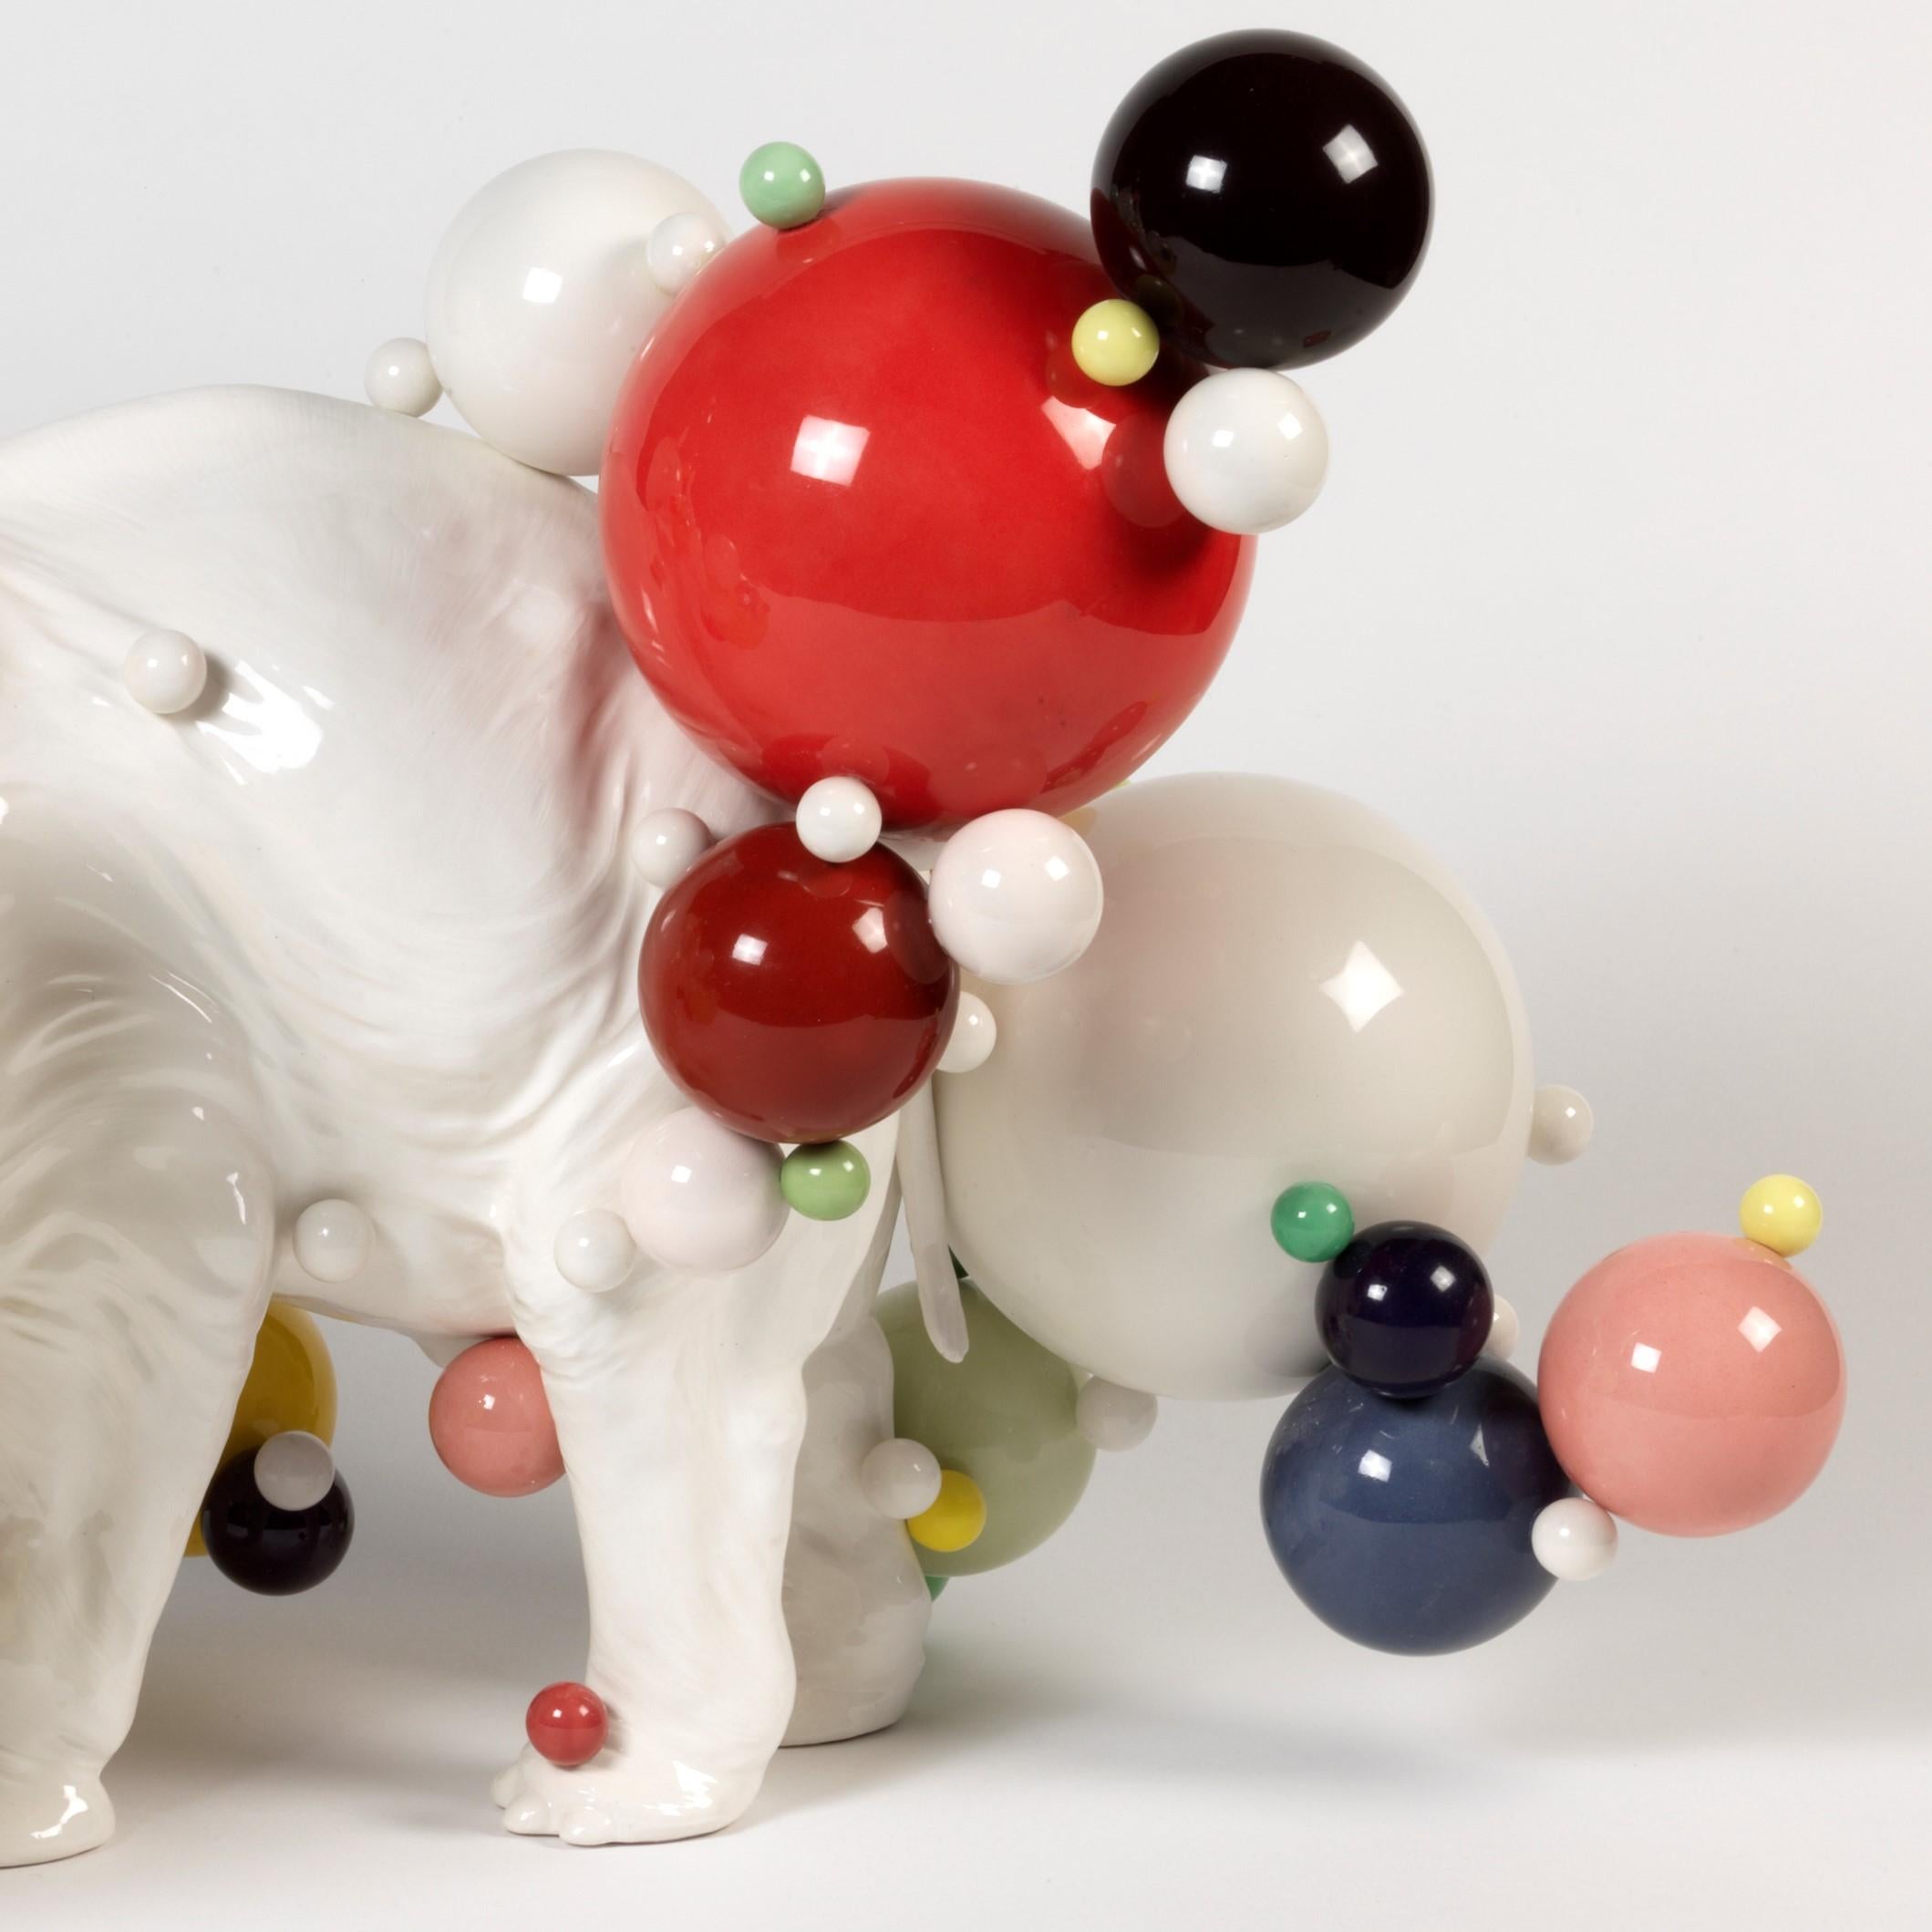 Glazed Elephant Ceramic Sculpture Italy Contemporary 21st Century Unique Piece For Sale